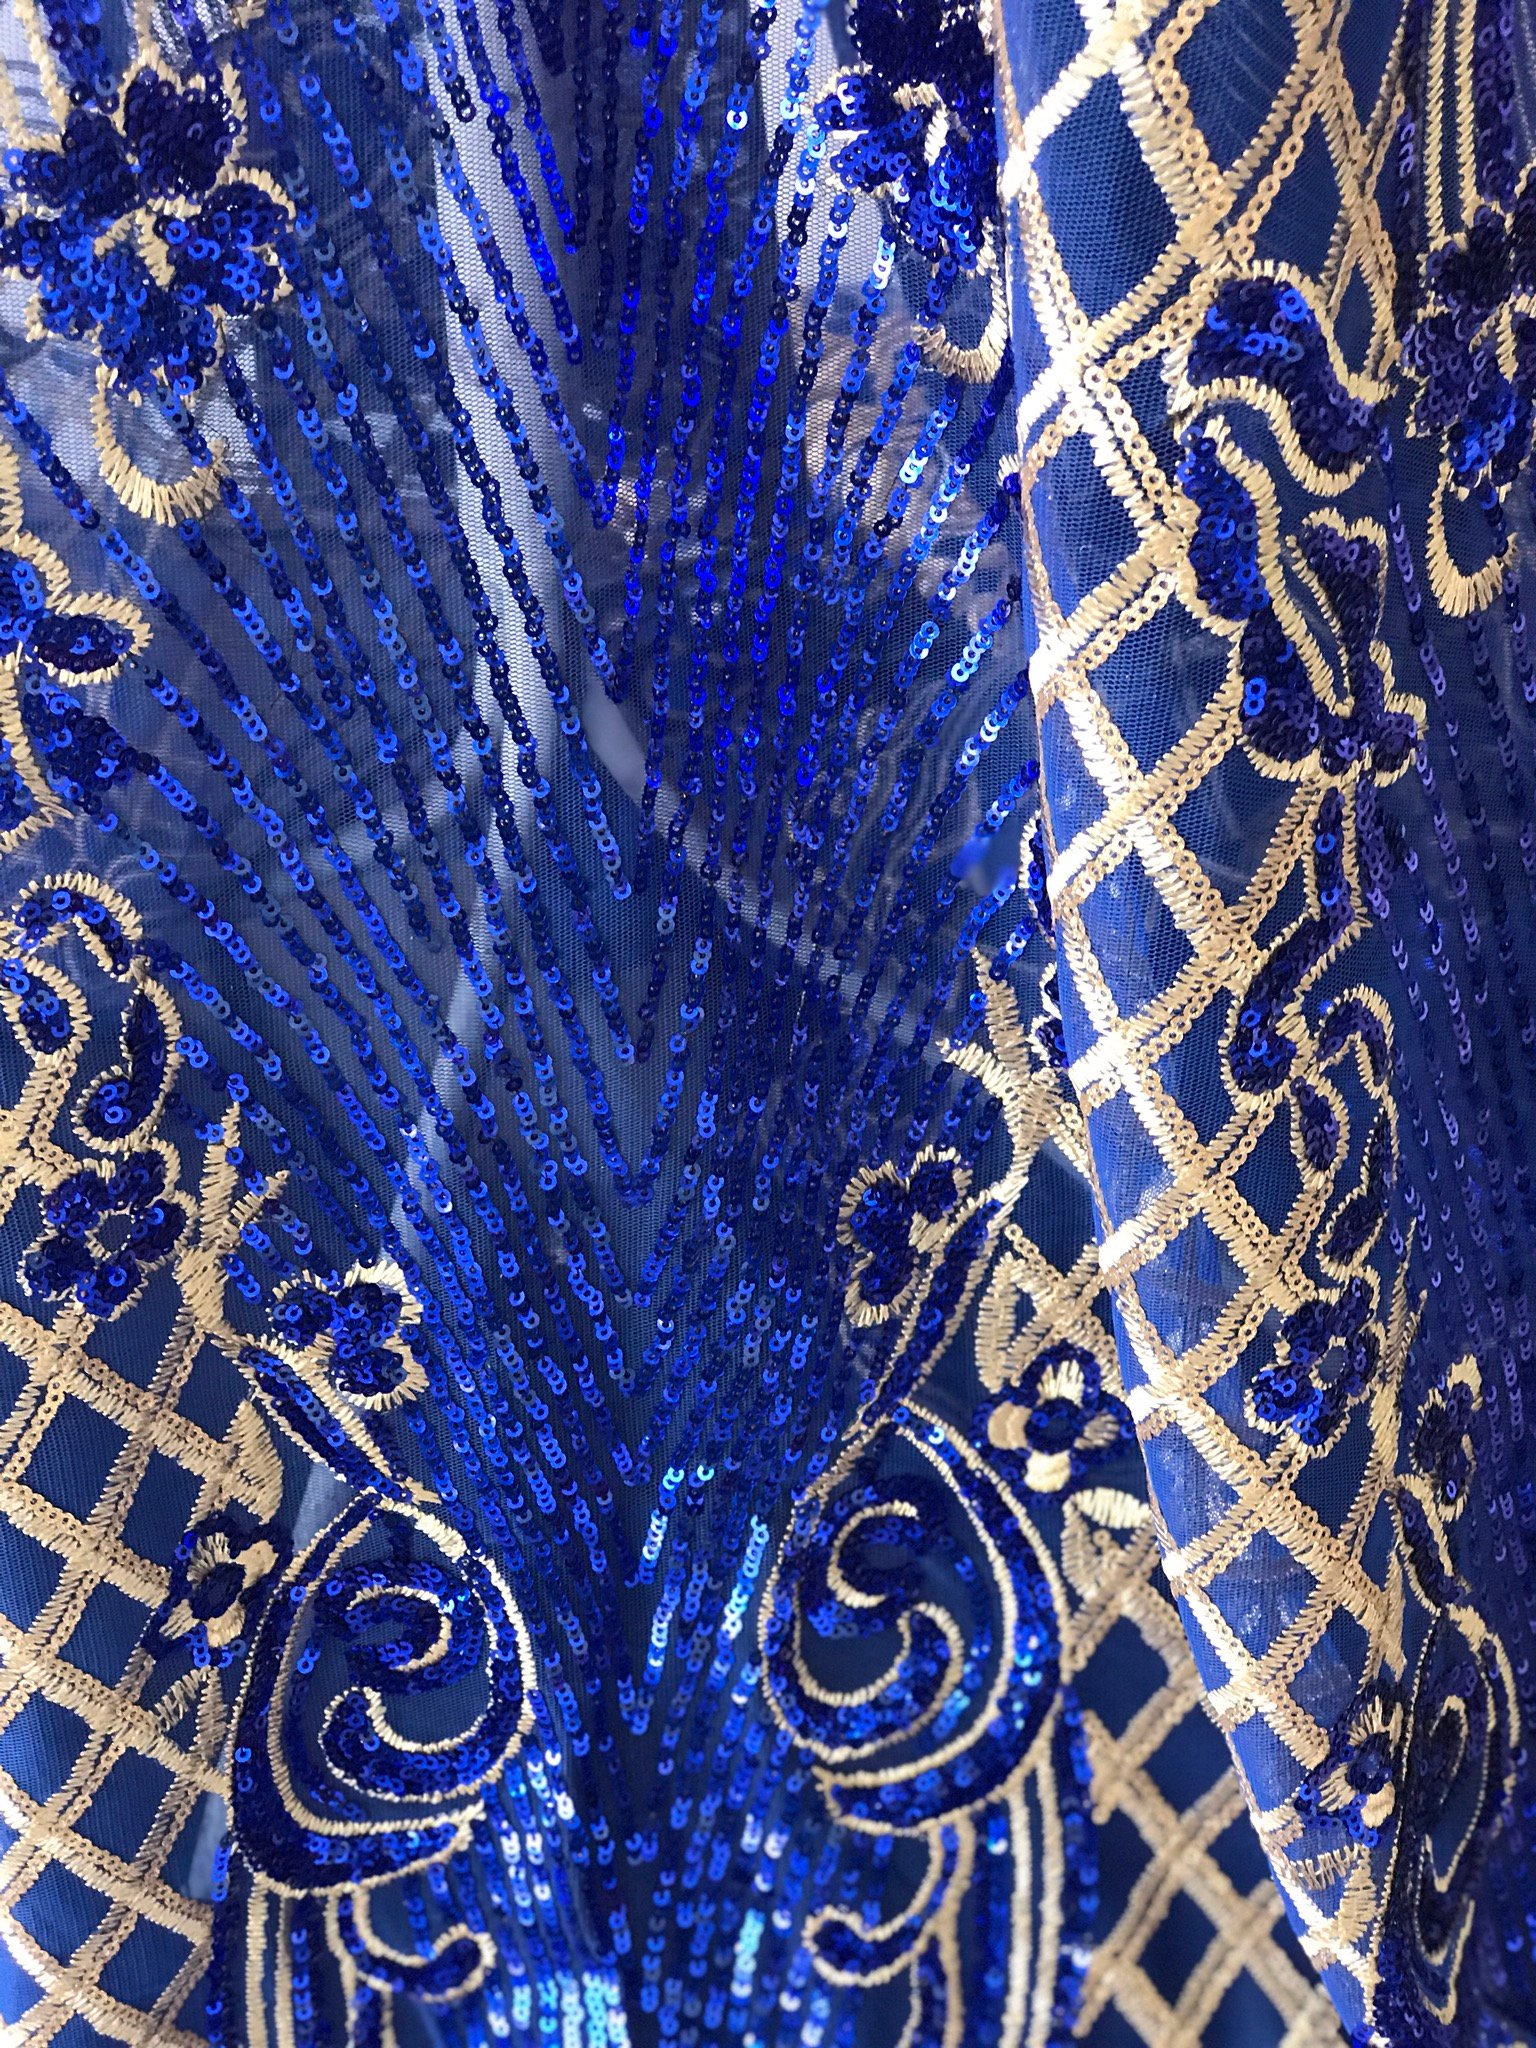 Gold on cobalt blue sequins lace fabric Baroque design evening